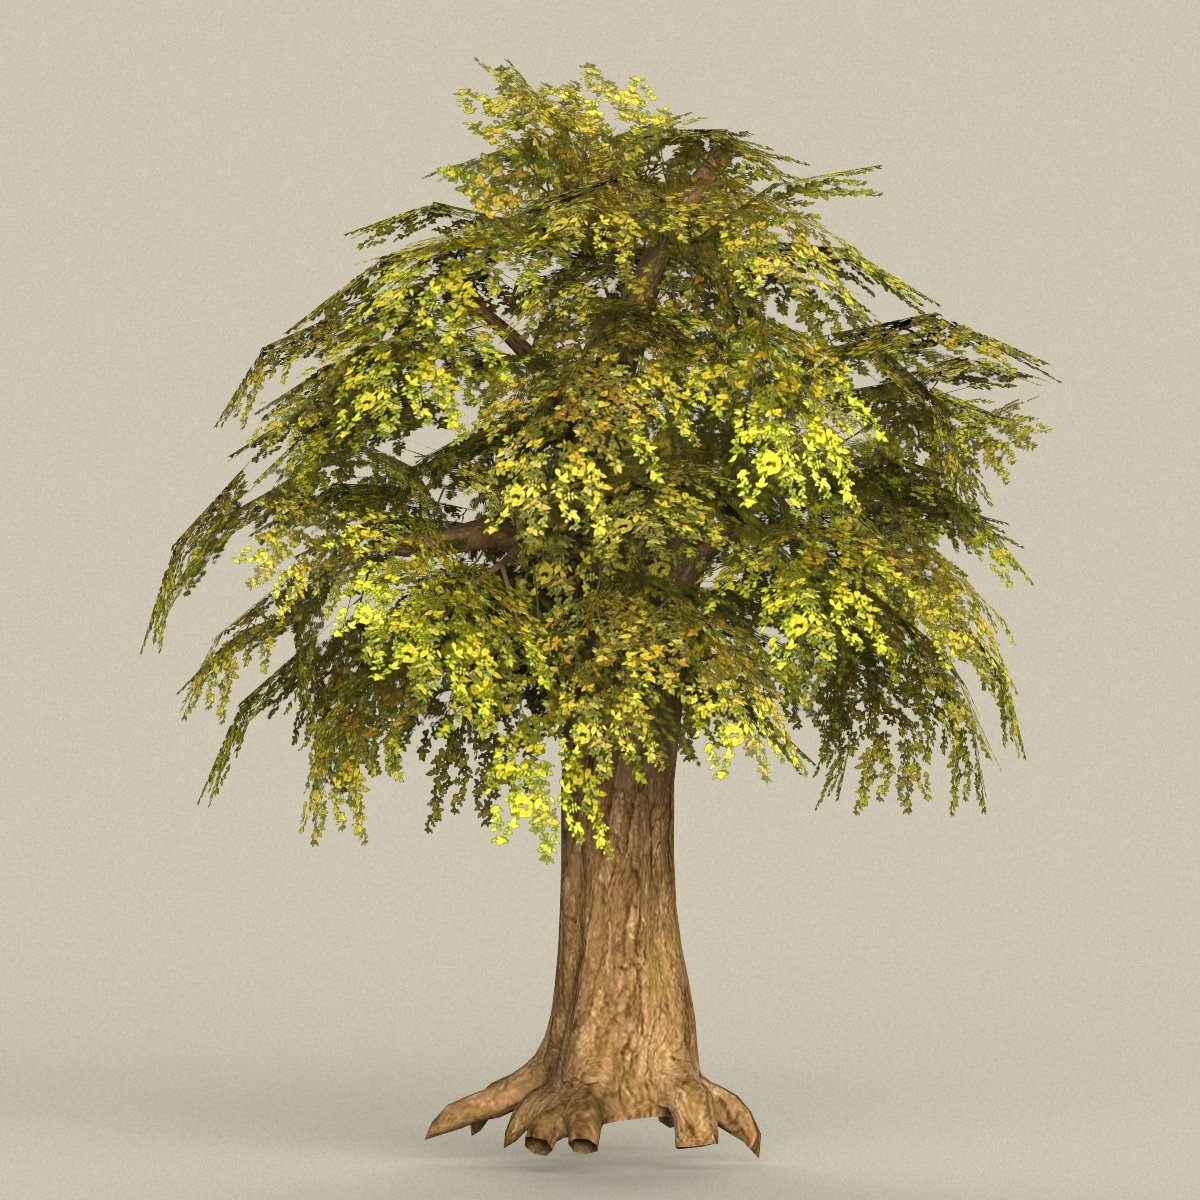 Unity trees